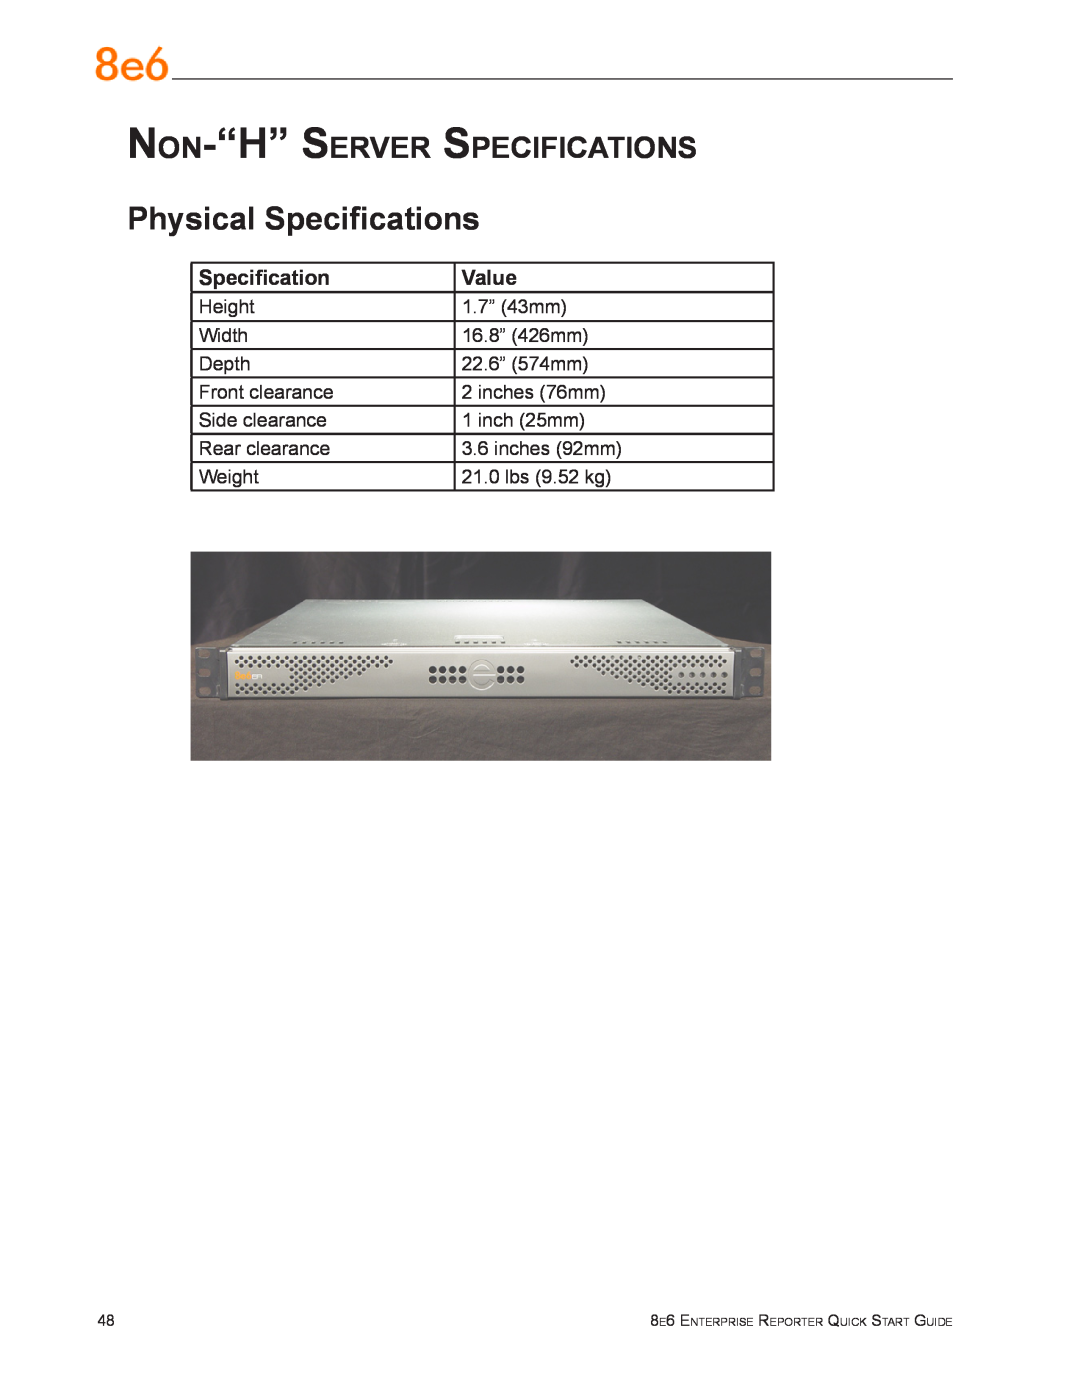 8e6 Technologies ERH-200 (5K02-24), ER3-100 (5K02-55) Physical Specifications, Non-“H” Server Specifications, Value 